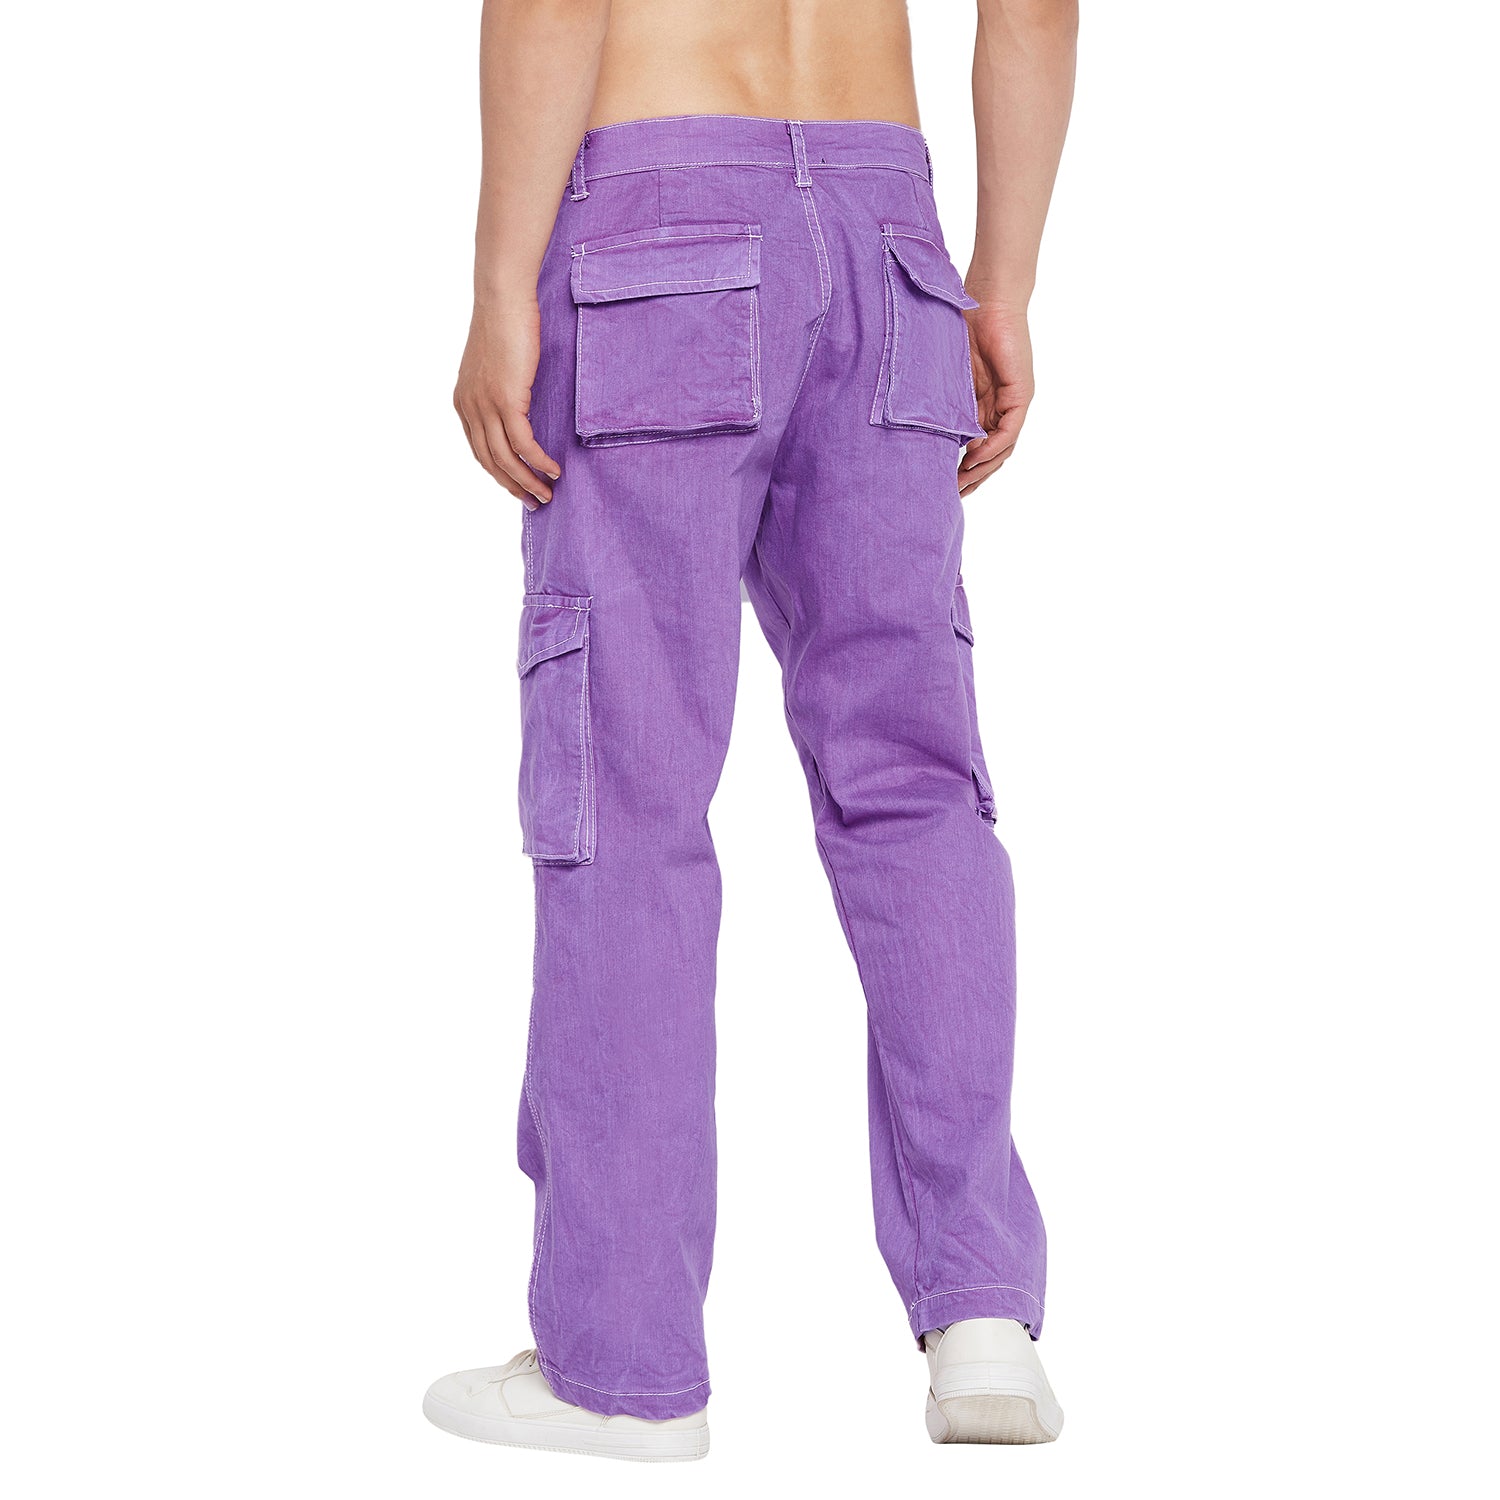 Designed Purple Cargo Style Pants SUPER 770